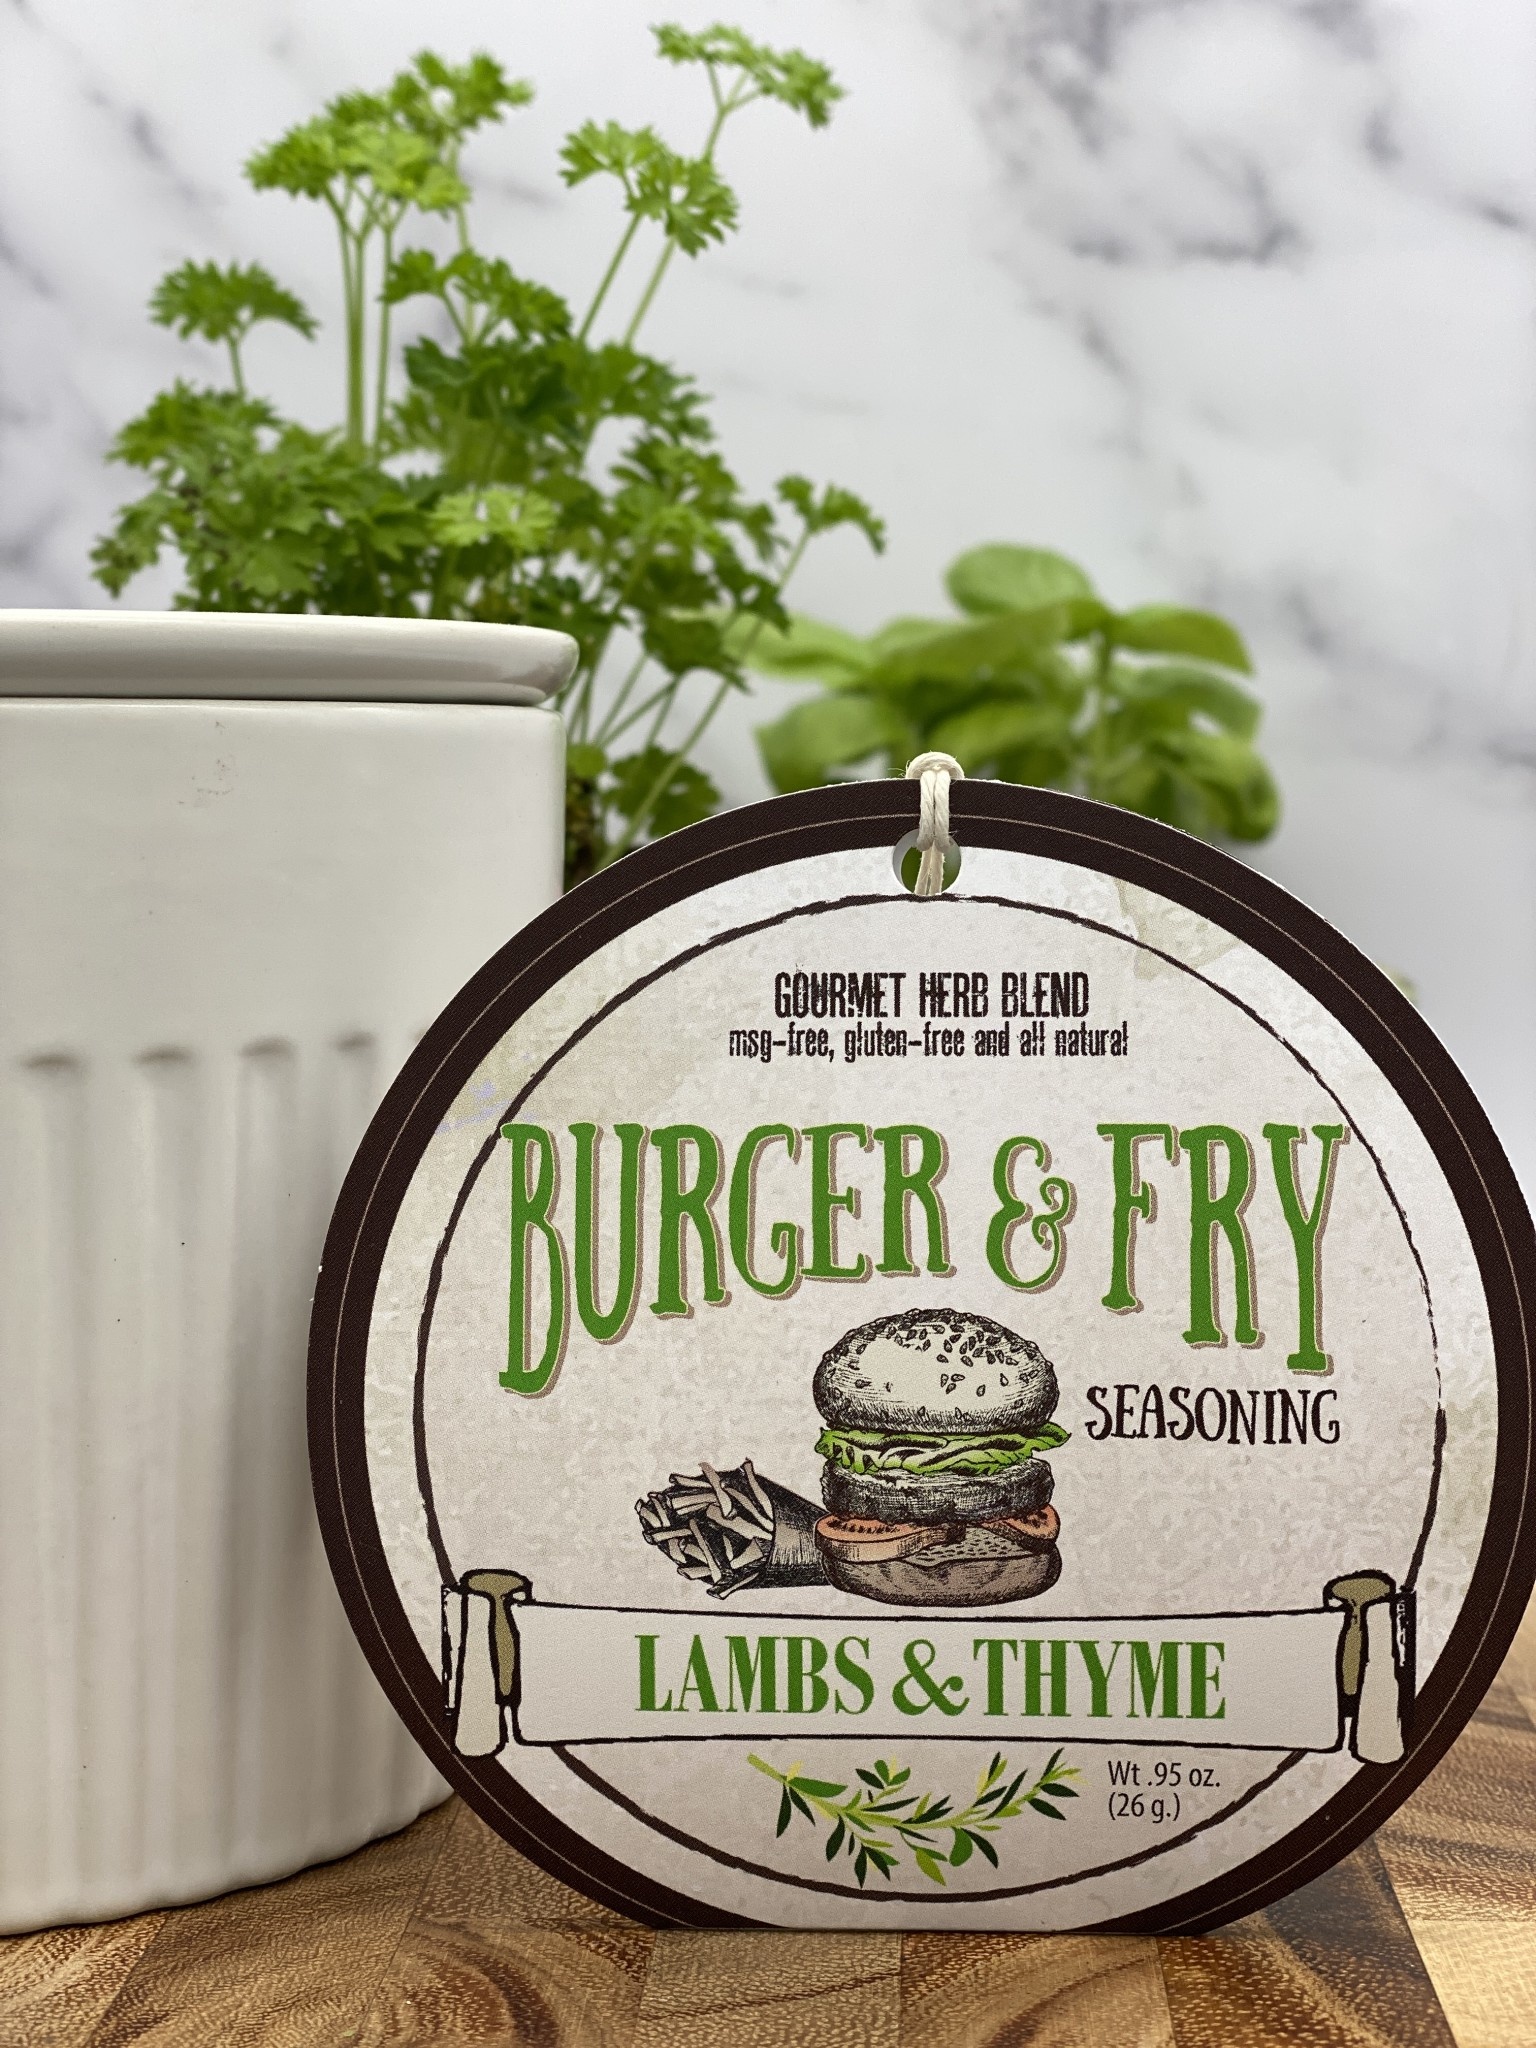 Lambs & Thyme Burger & Fry Seasoning